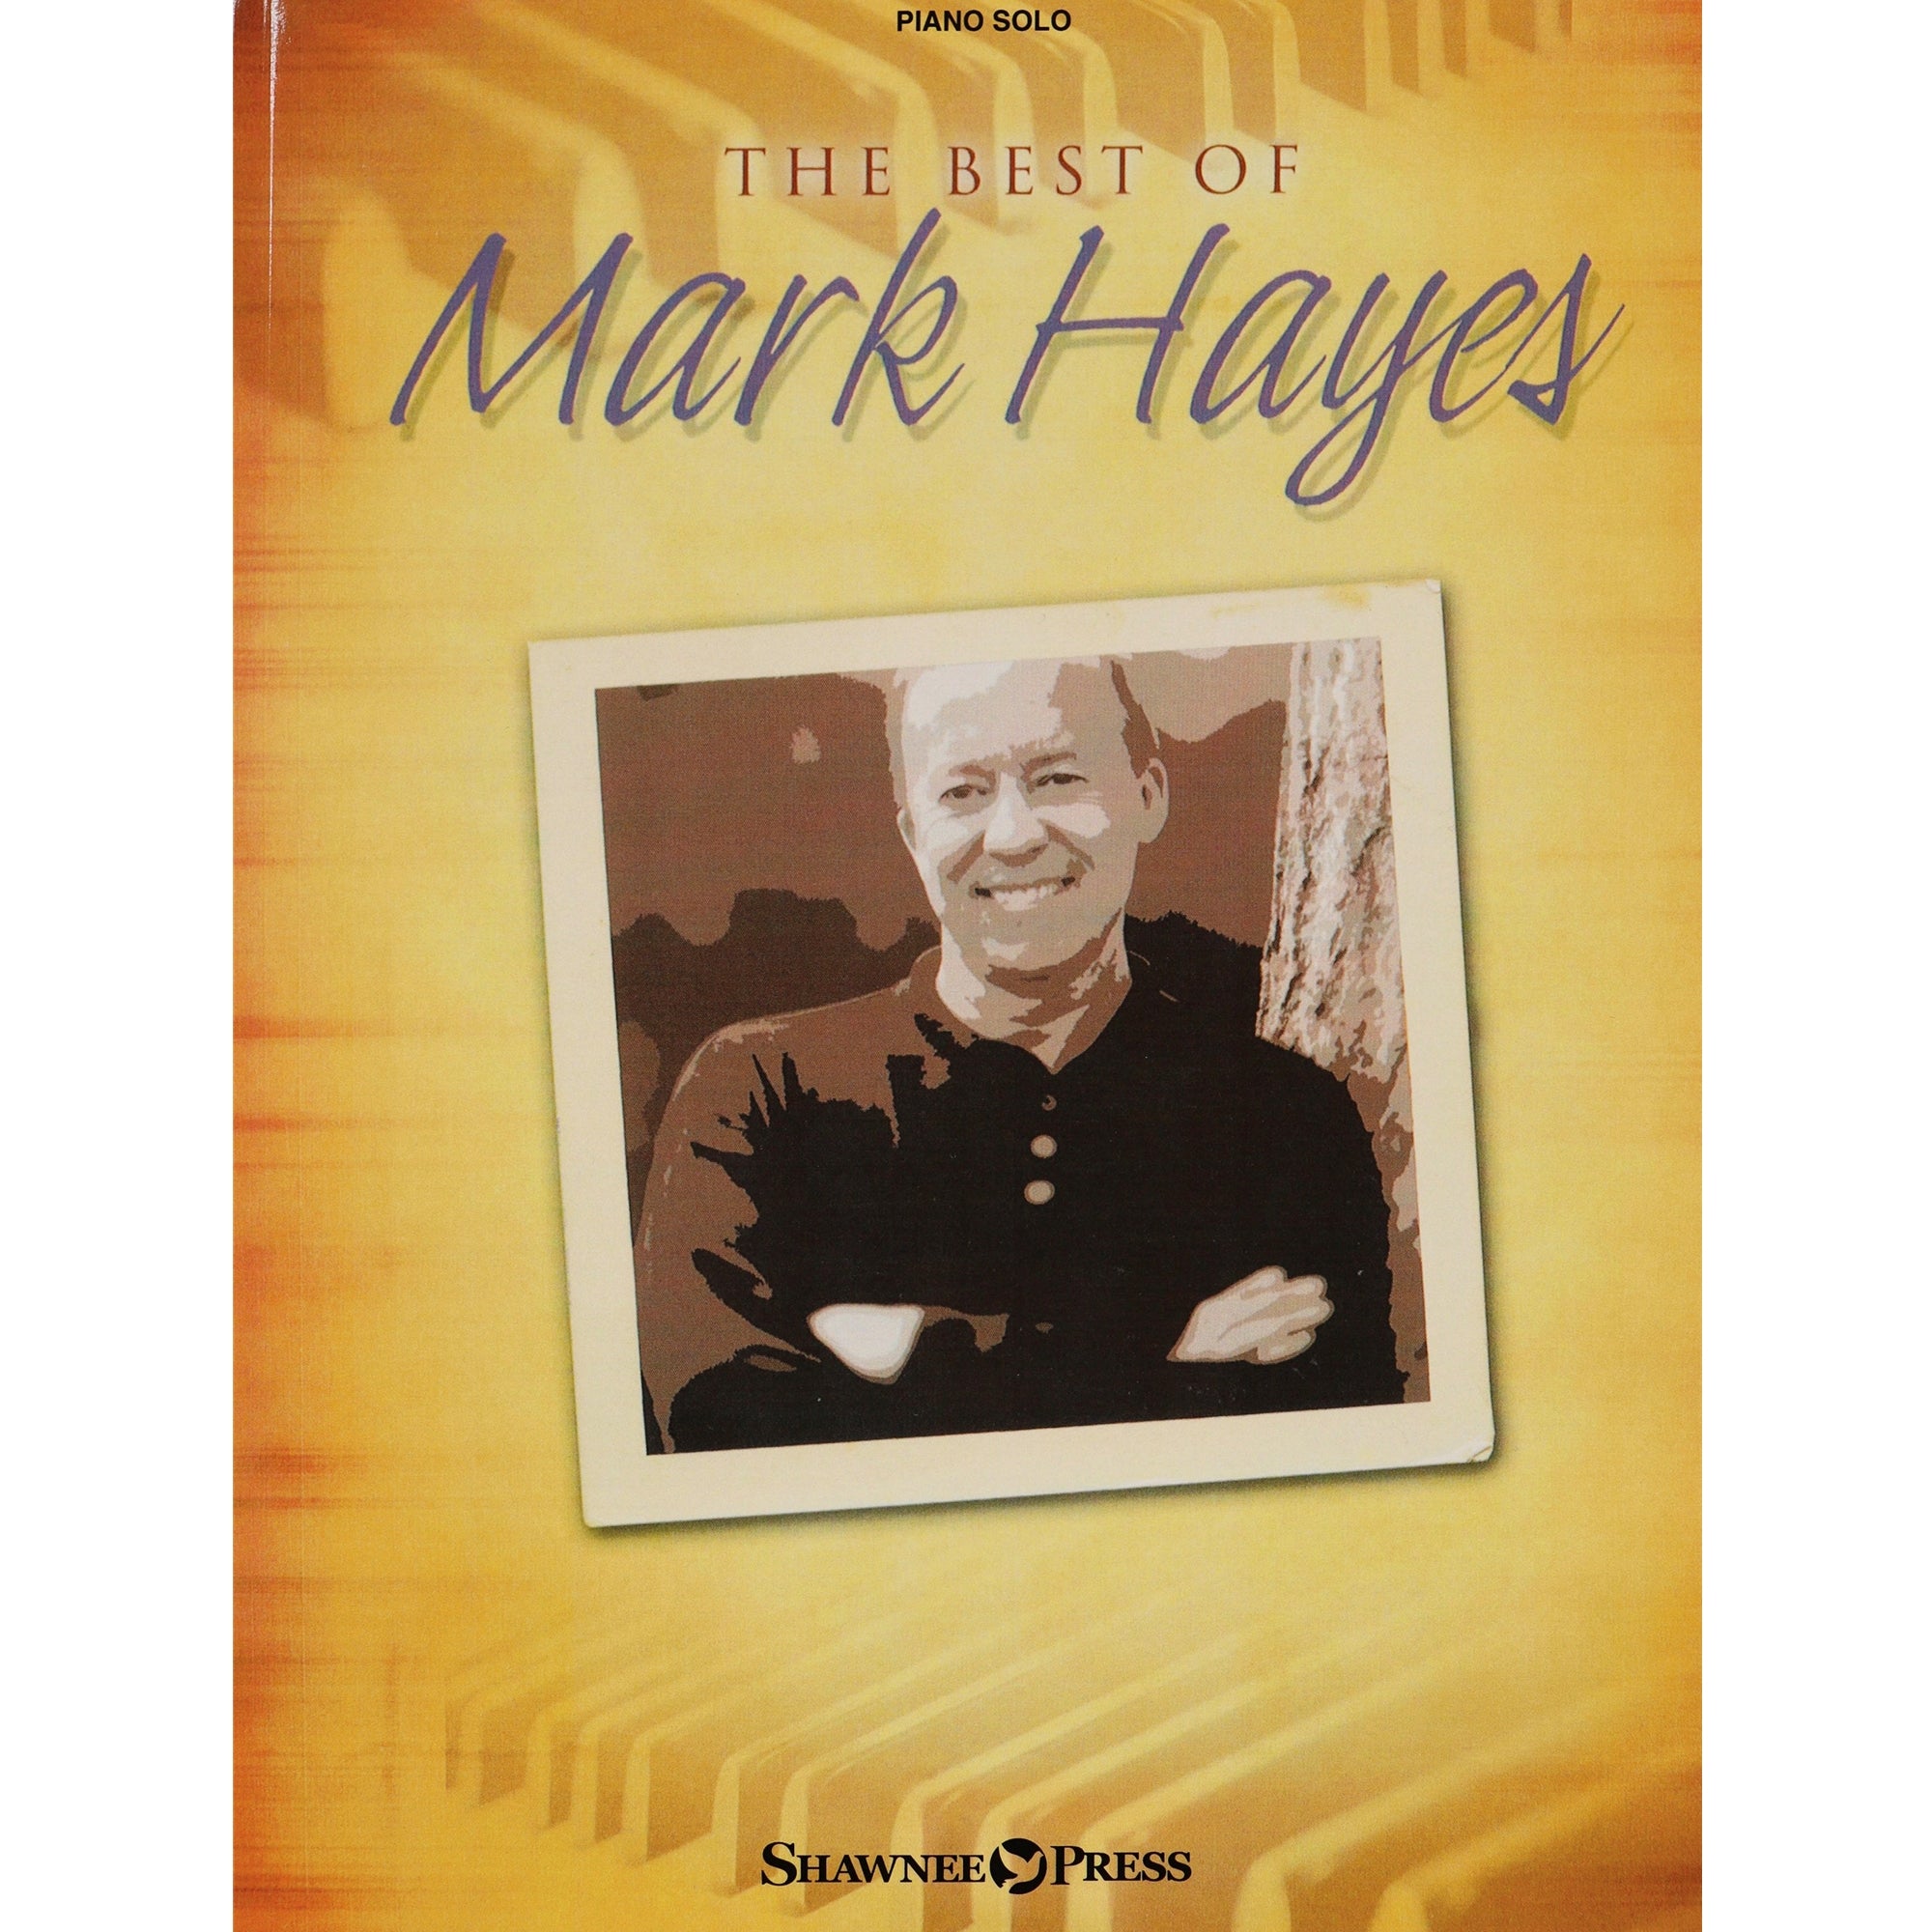 HAL LEONARD 35022779 The Best of Mark Hayes